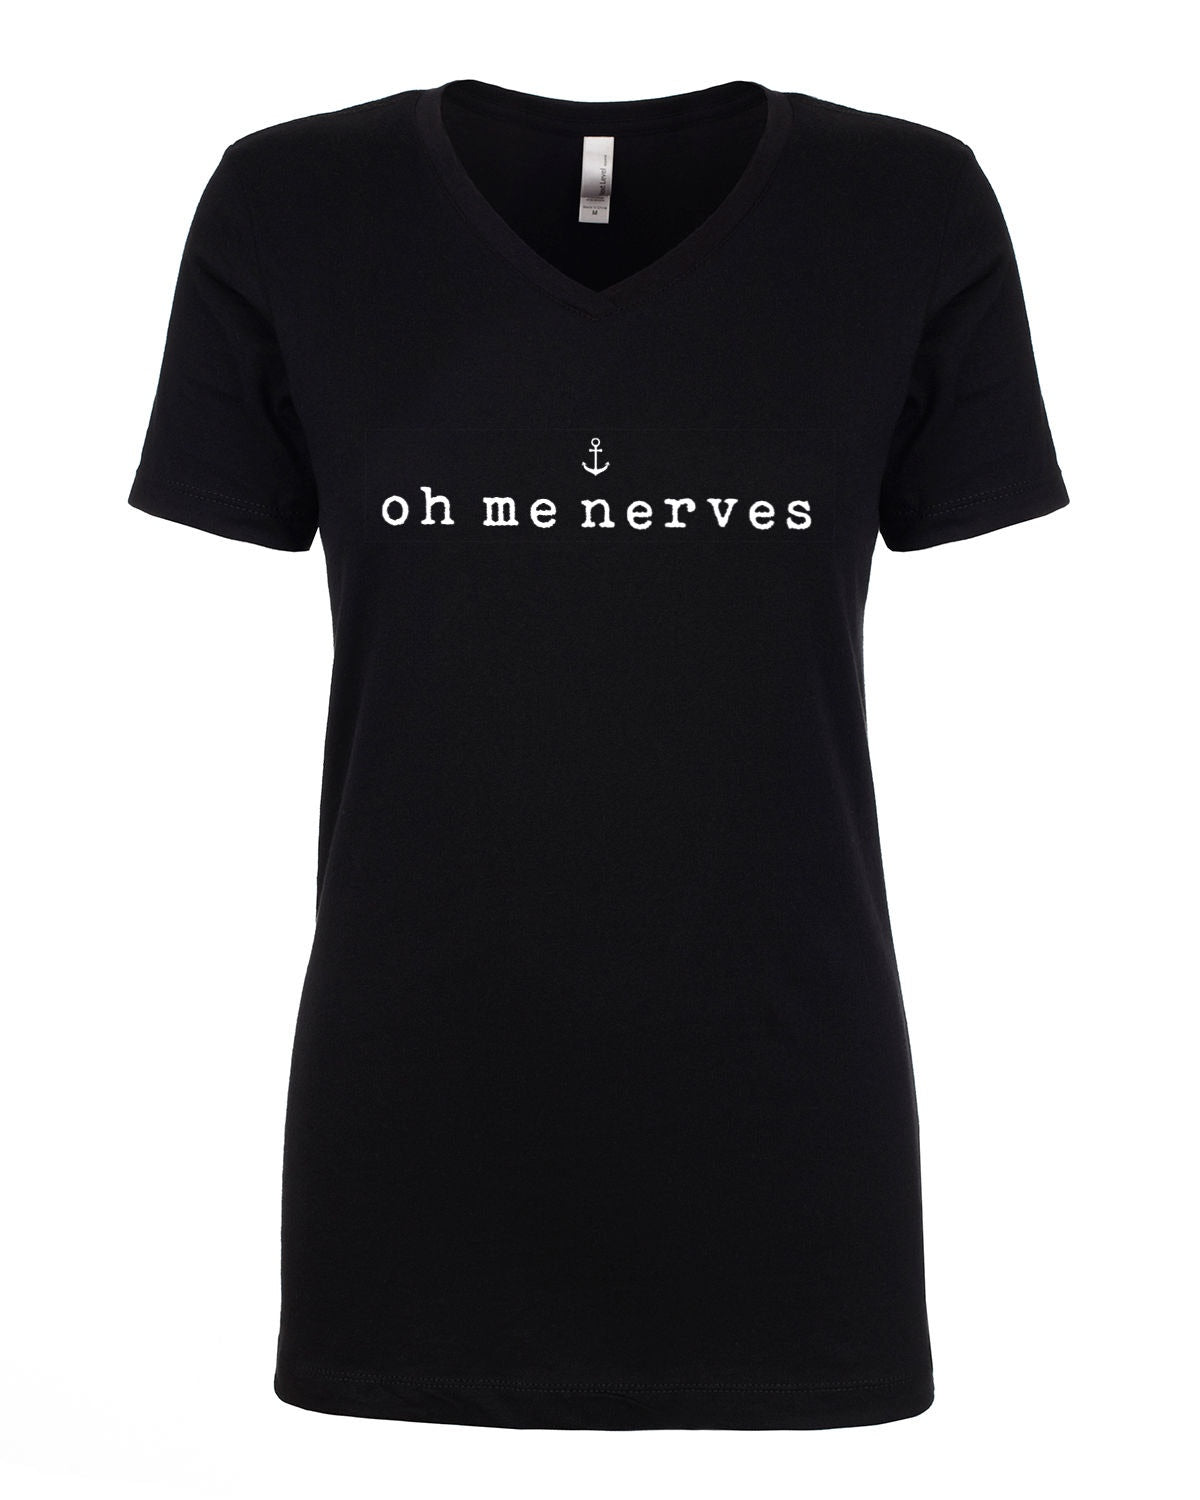 "Oh Me Nerves" T-Shirt